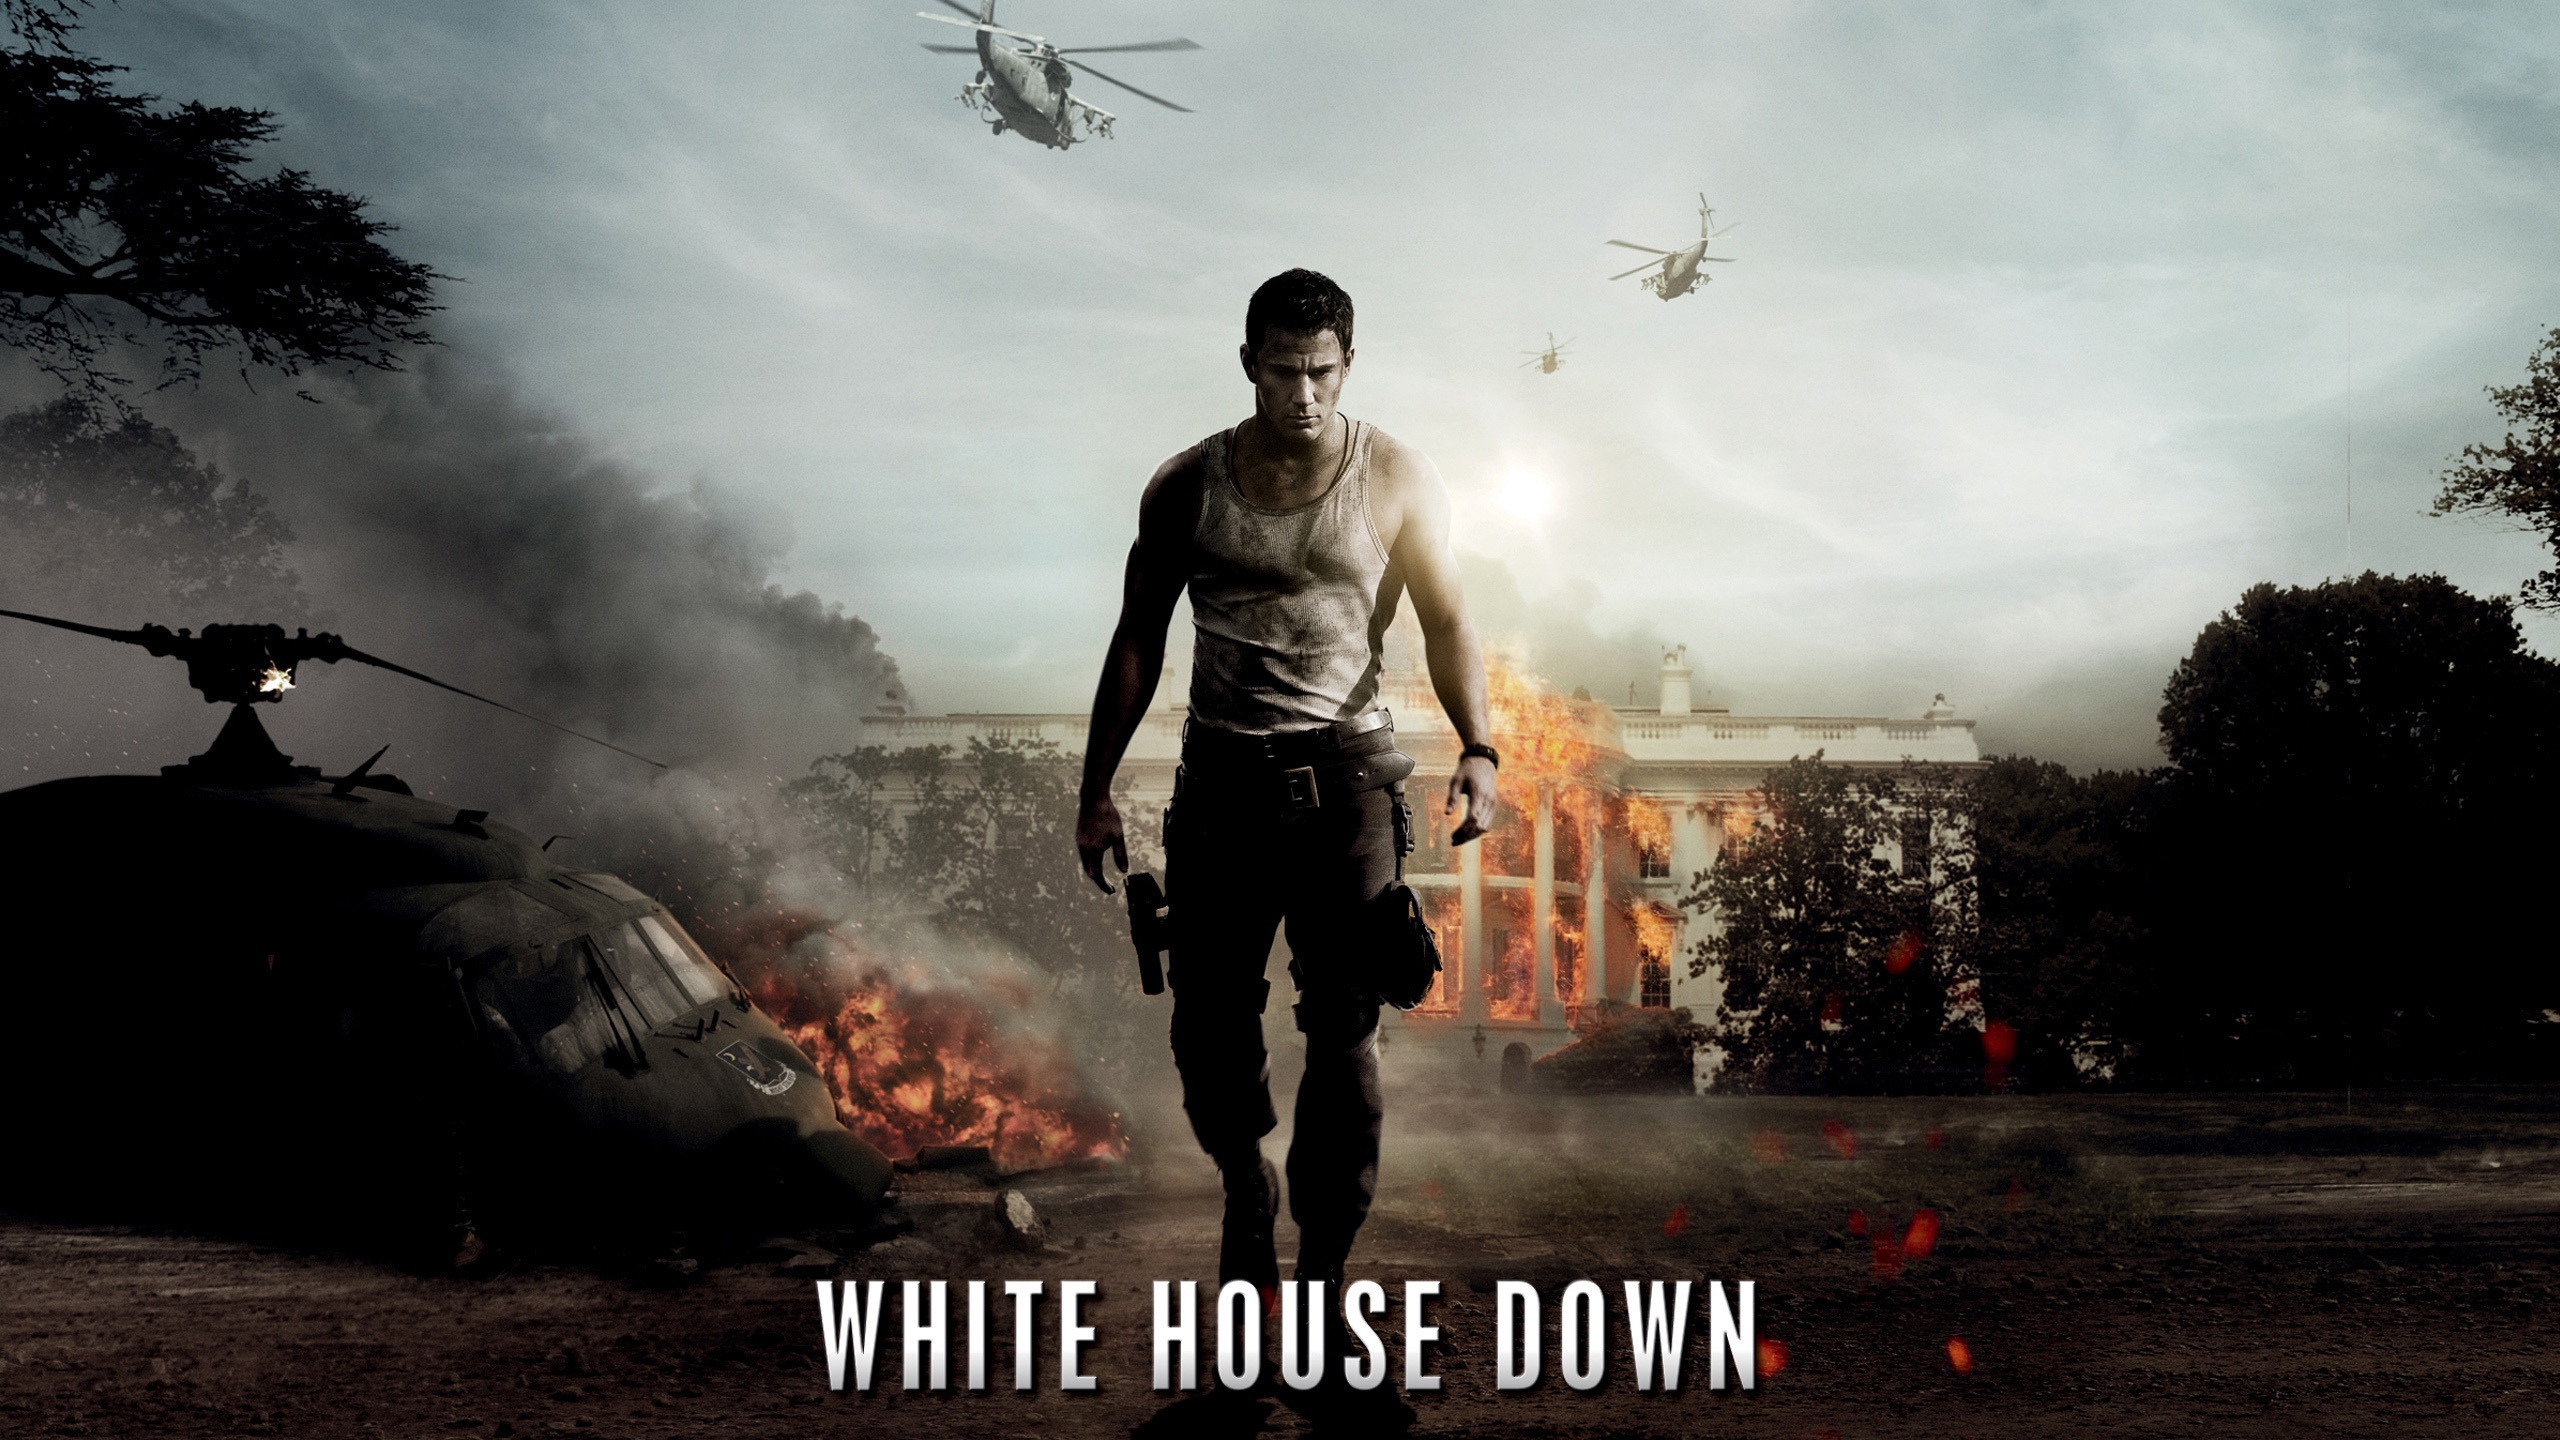 White House Down 2013 for 2560x1440 HDTV resolution